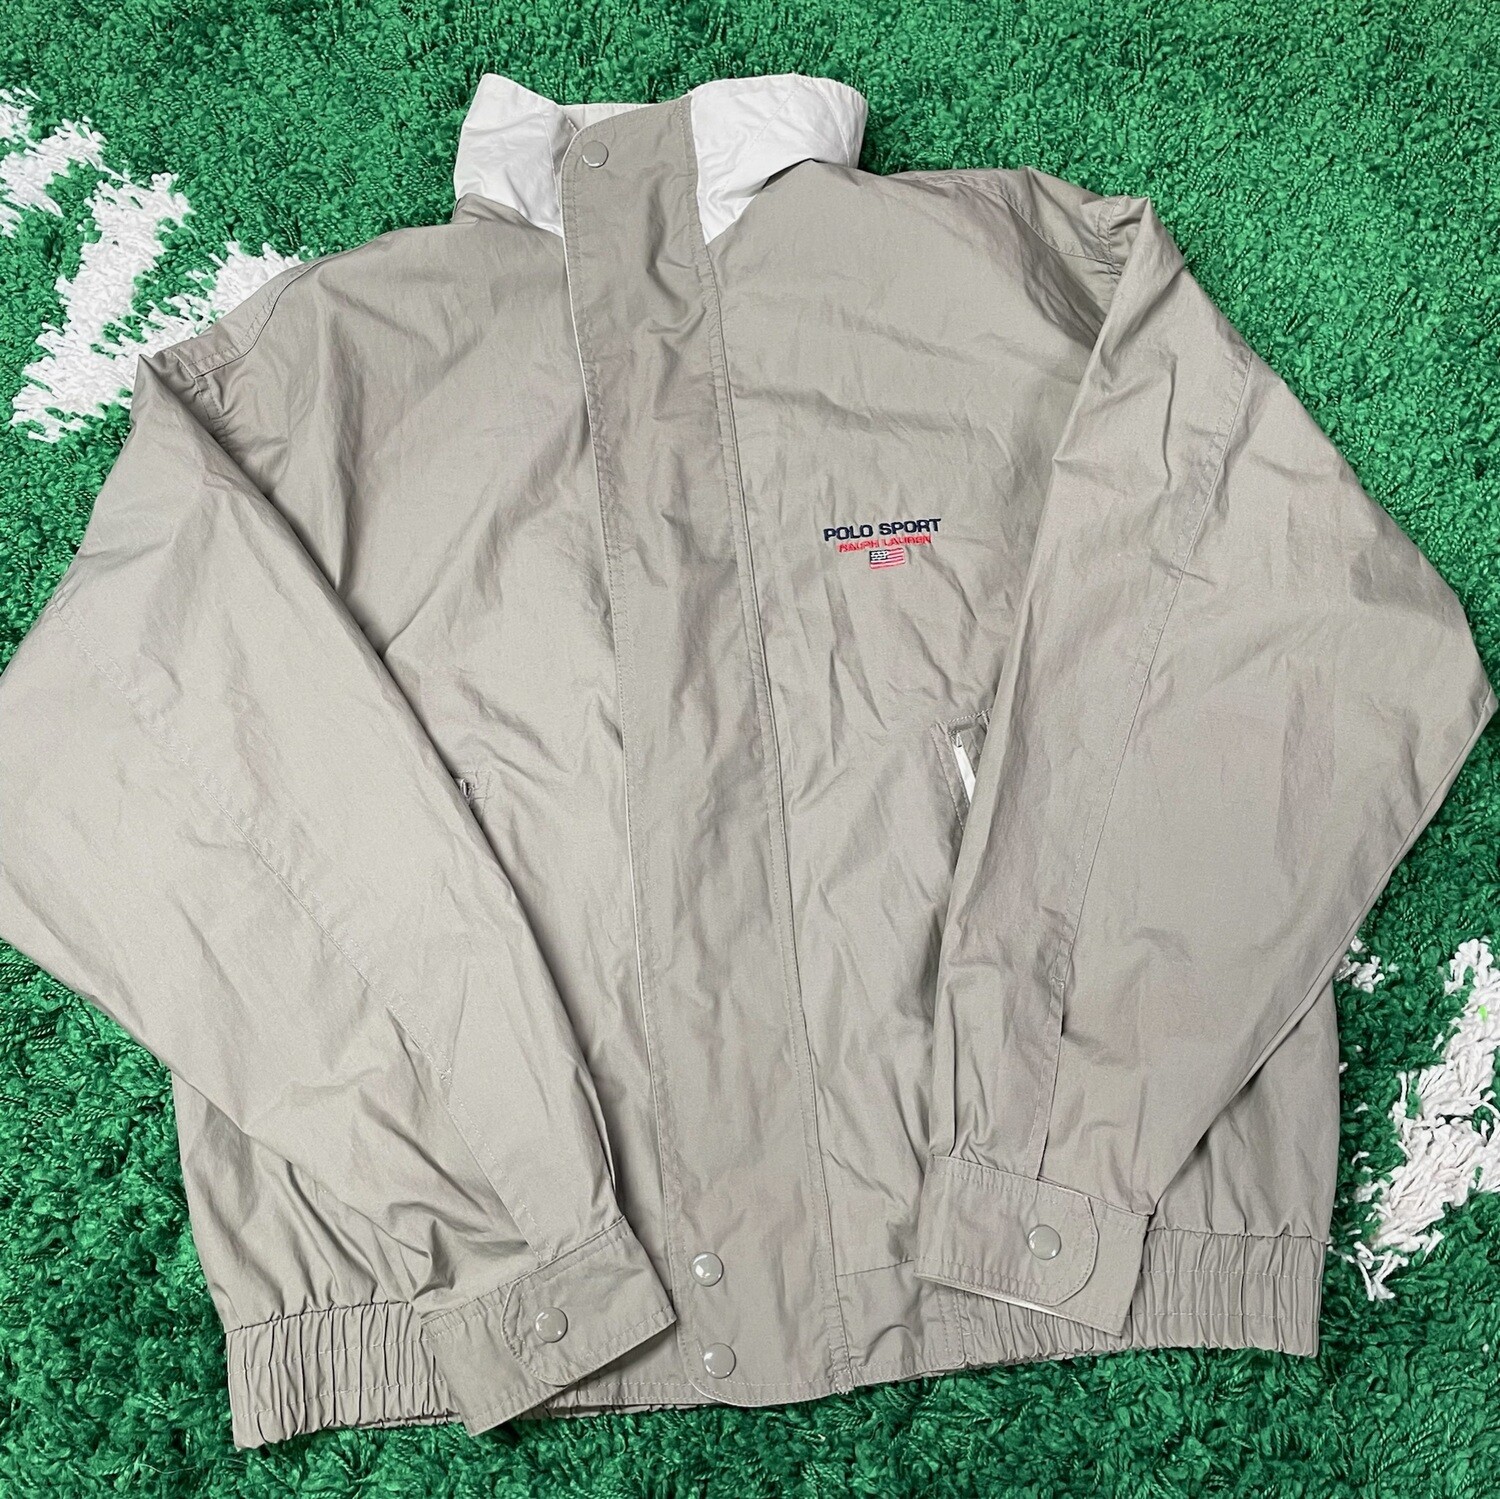 Polo Sport USA Grey Jacket Size Large